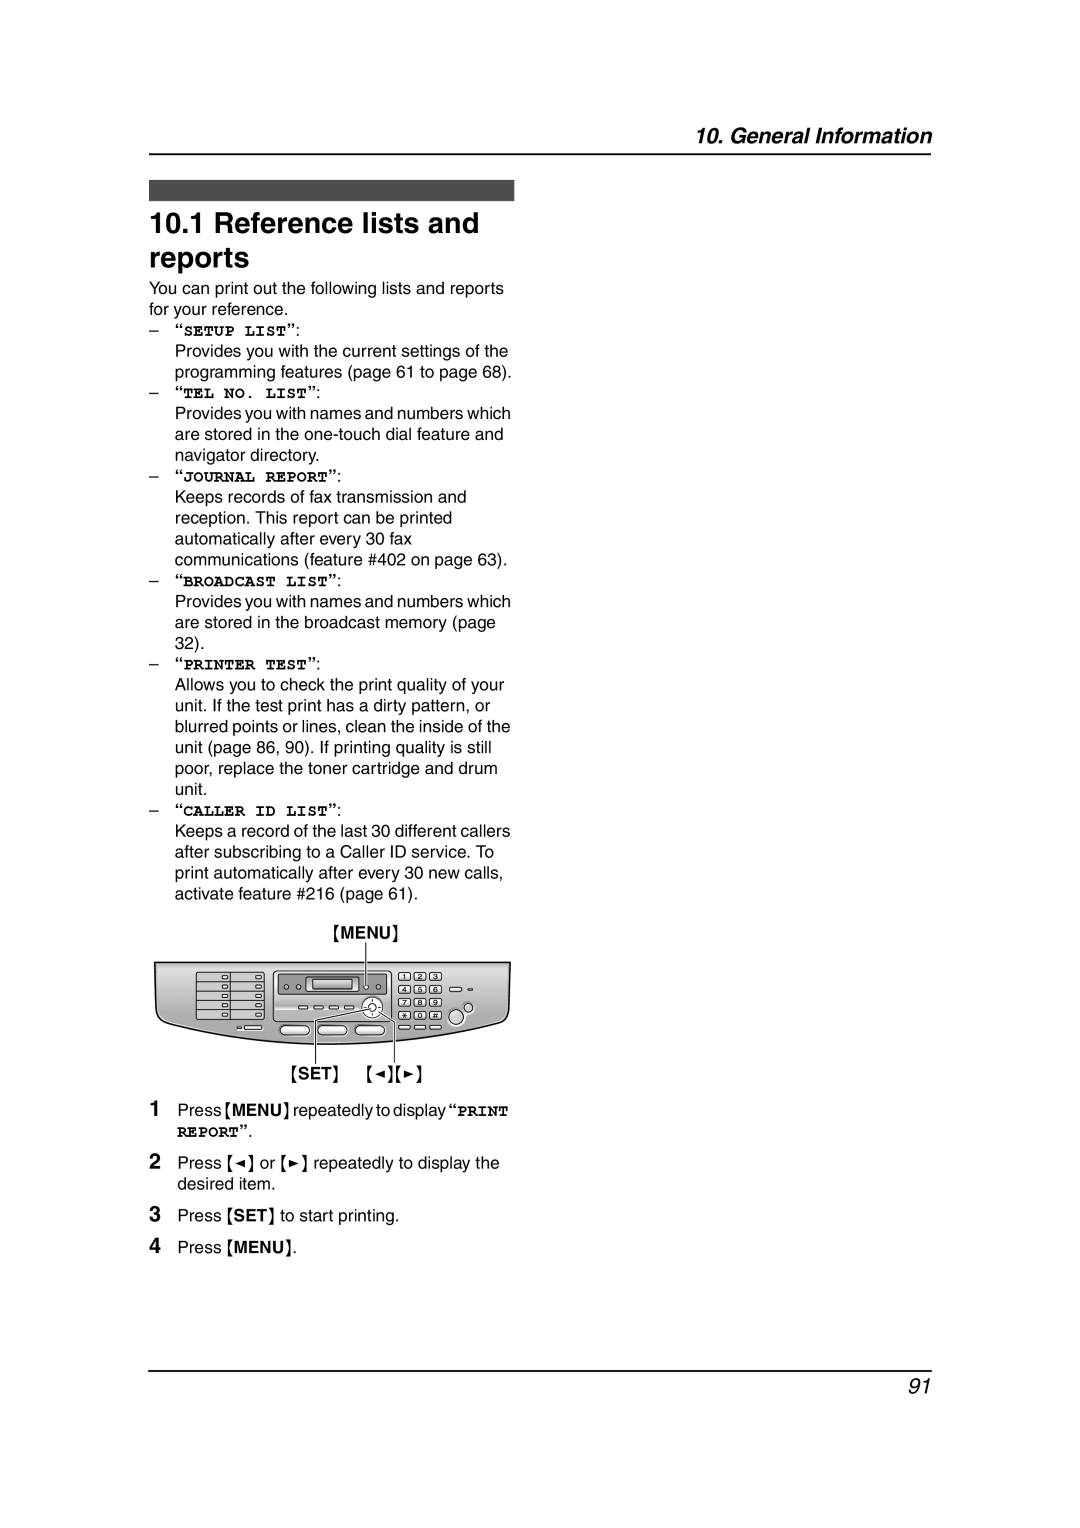 Panasonic KX-FLB851 Reference lists and reports, General Information, “Setup List”, “Tel No. List”, “Journal Report”, Menu 